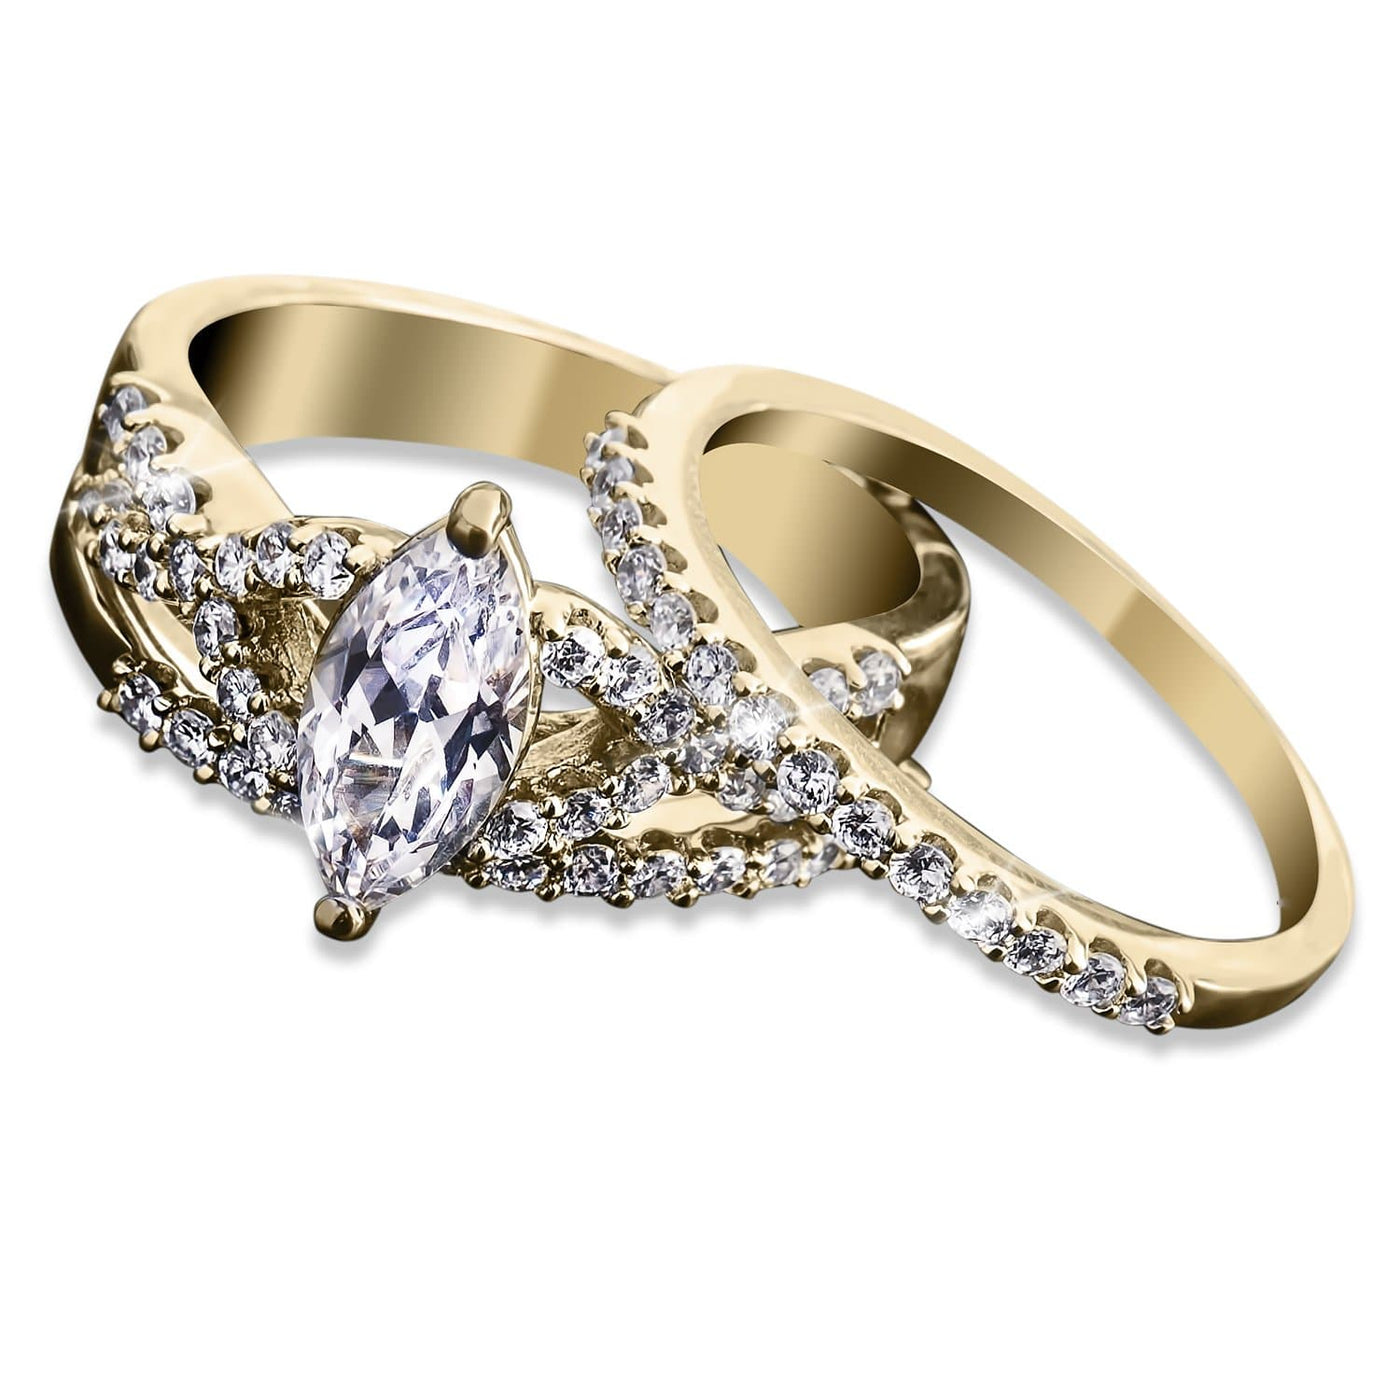 Daniel Steiger Fortuna Golden Bridal Ring